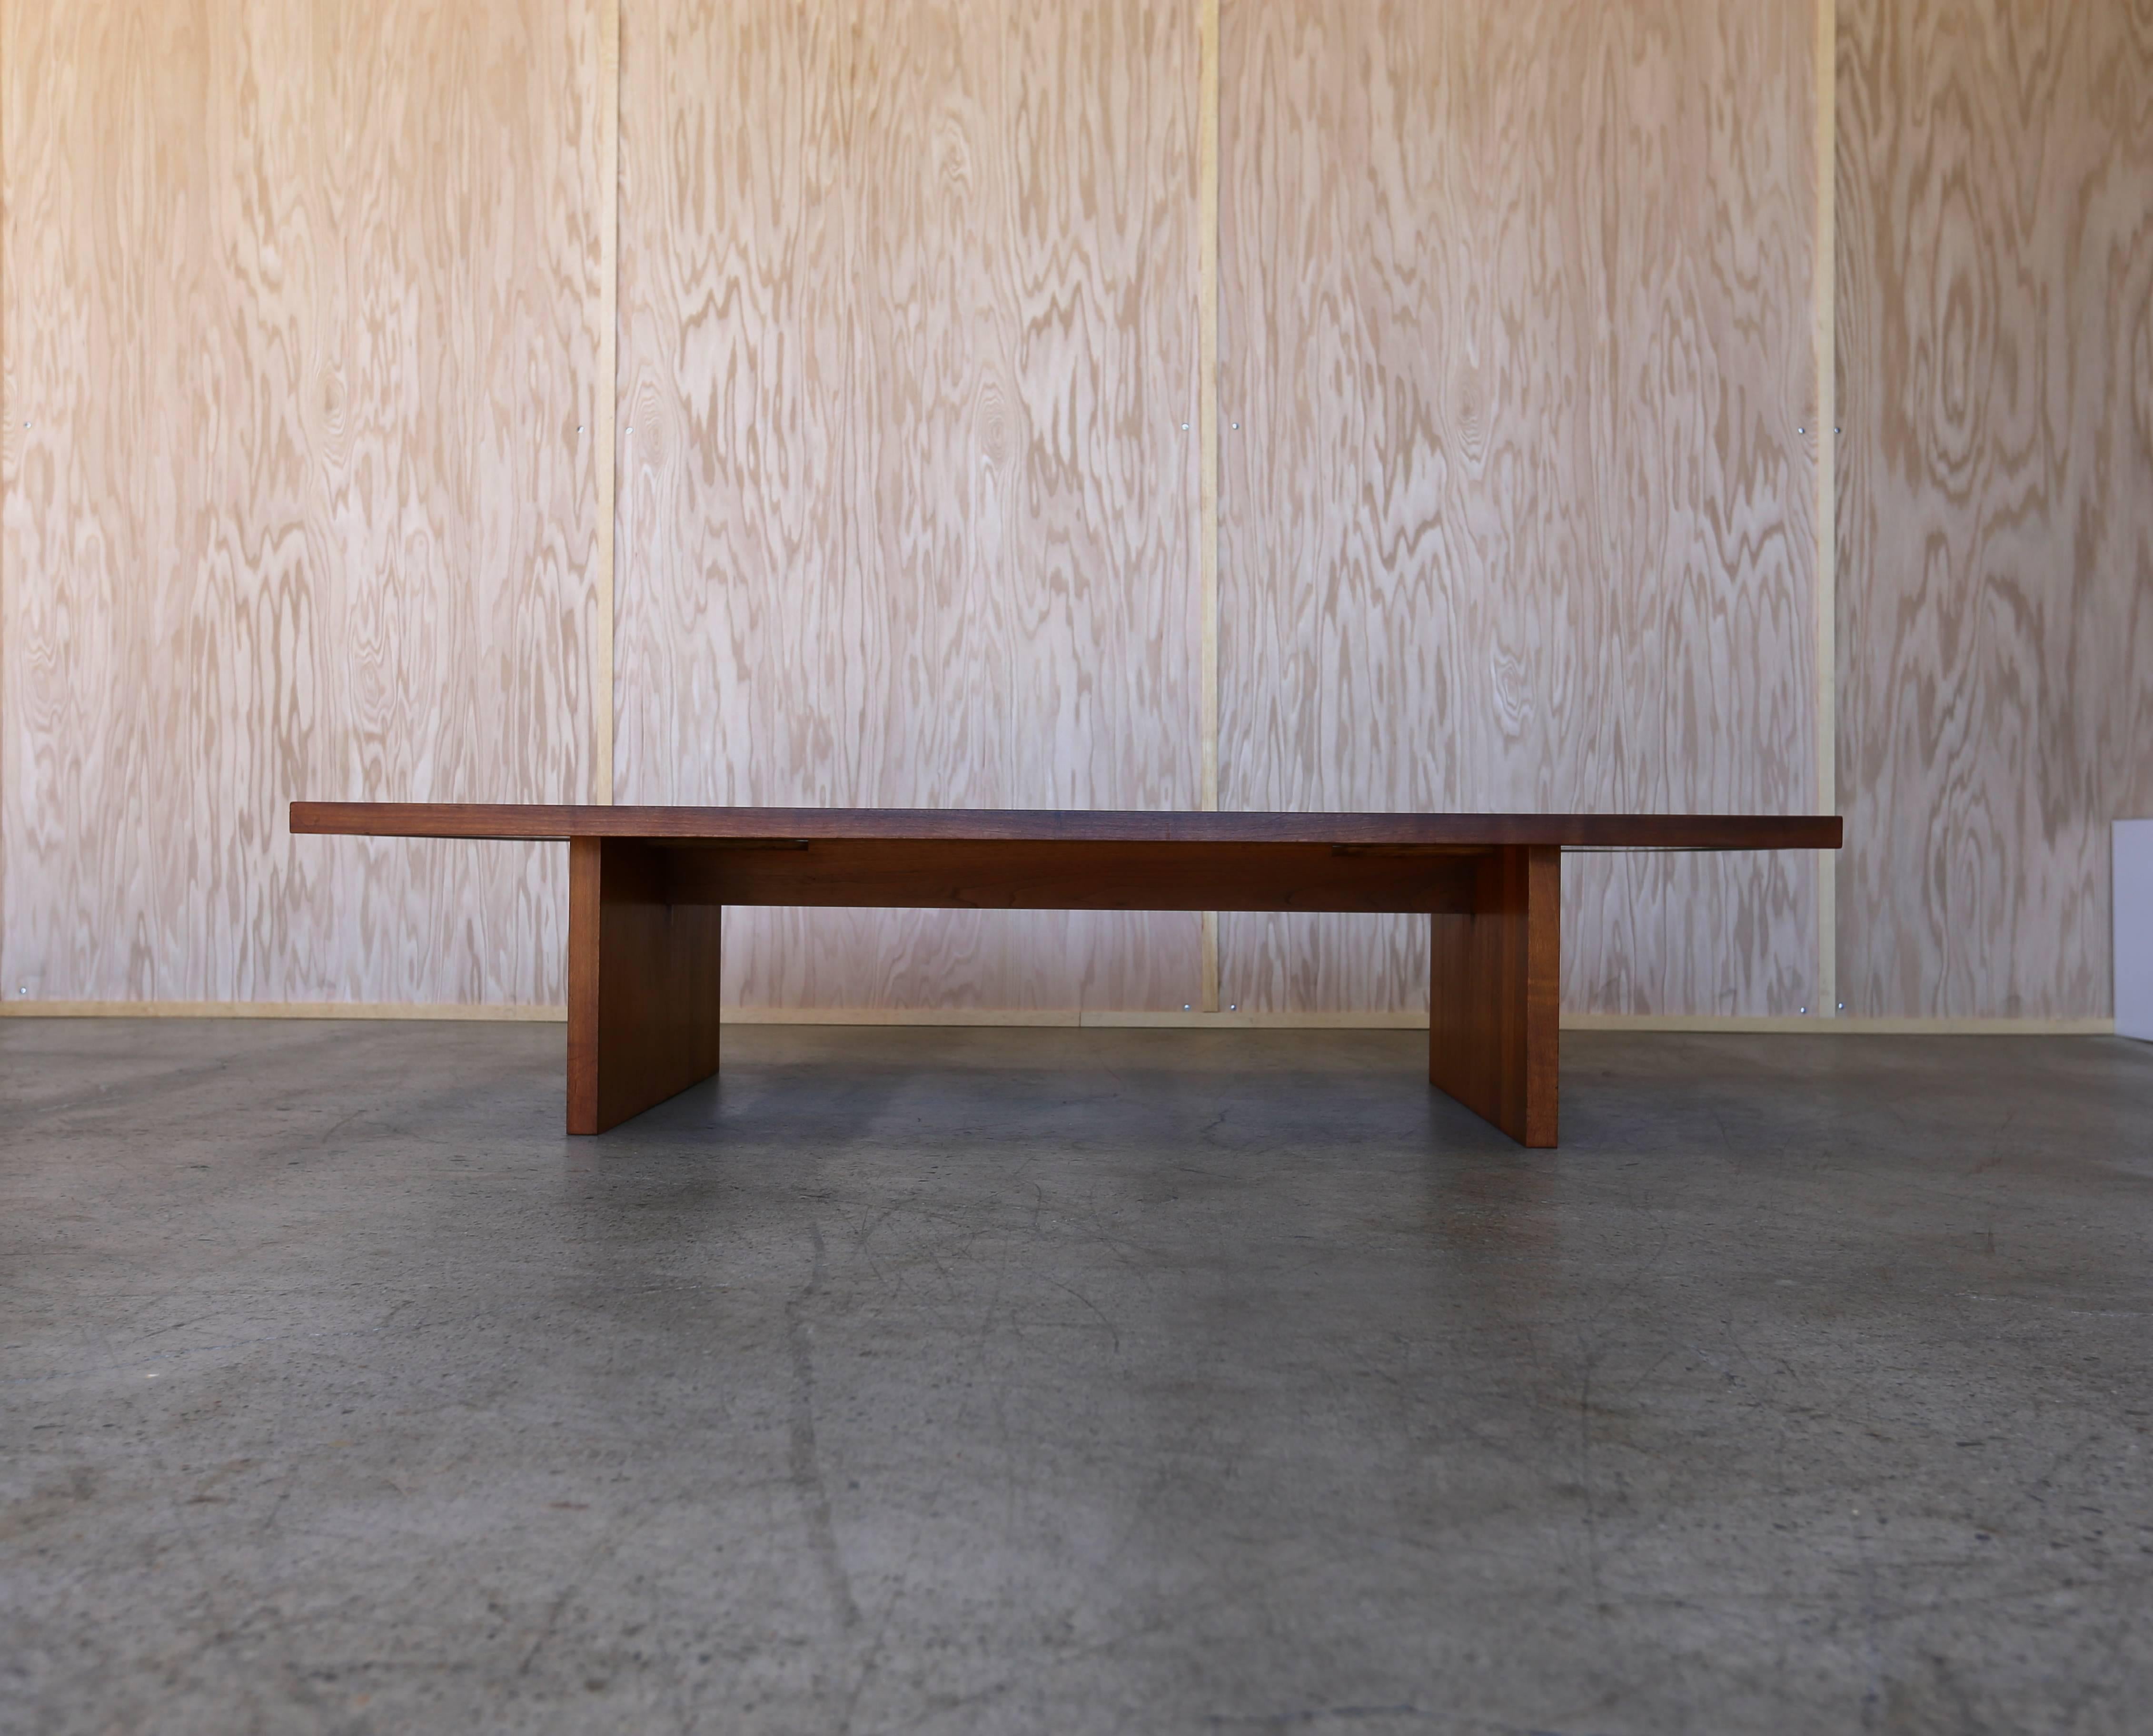 Coffee table by California Modern Designer Frank Rohloff.